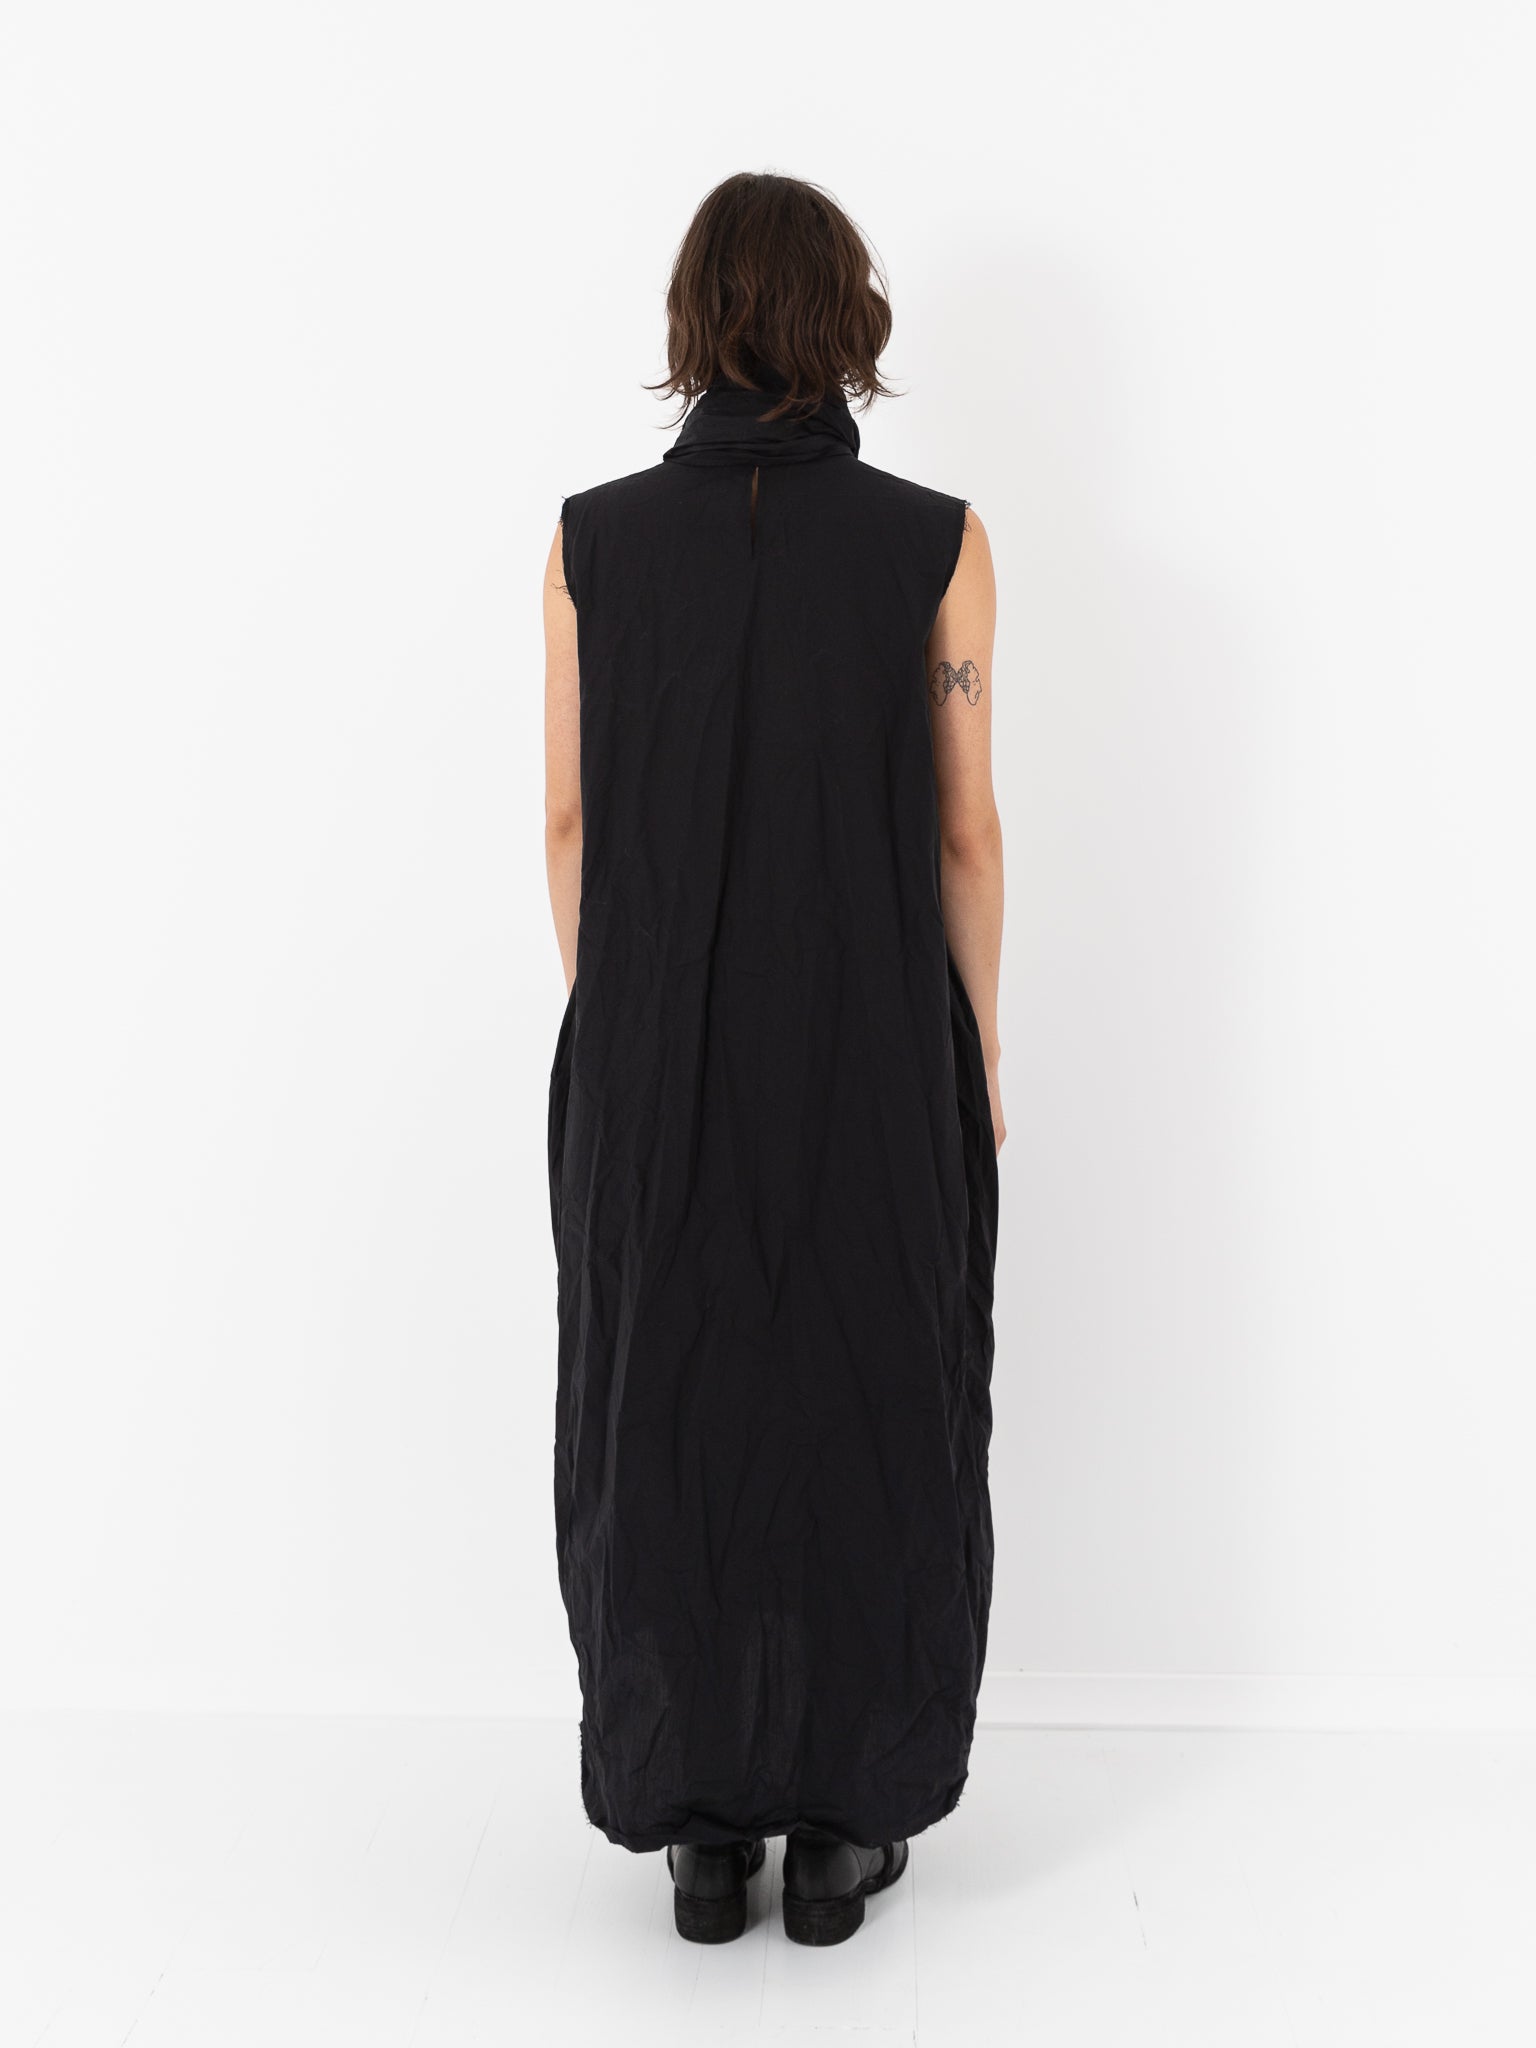 SCHA Sleeveless Dress, Black - Worthwhile, Inc.